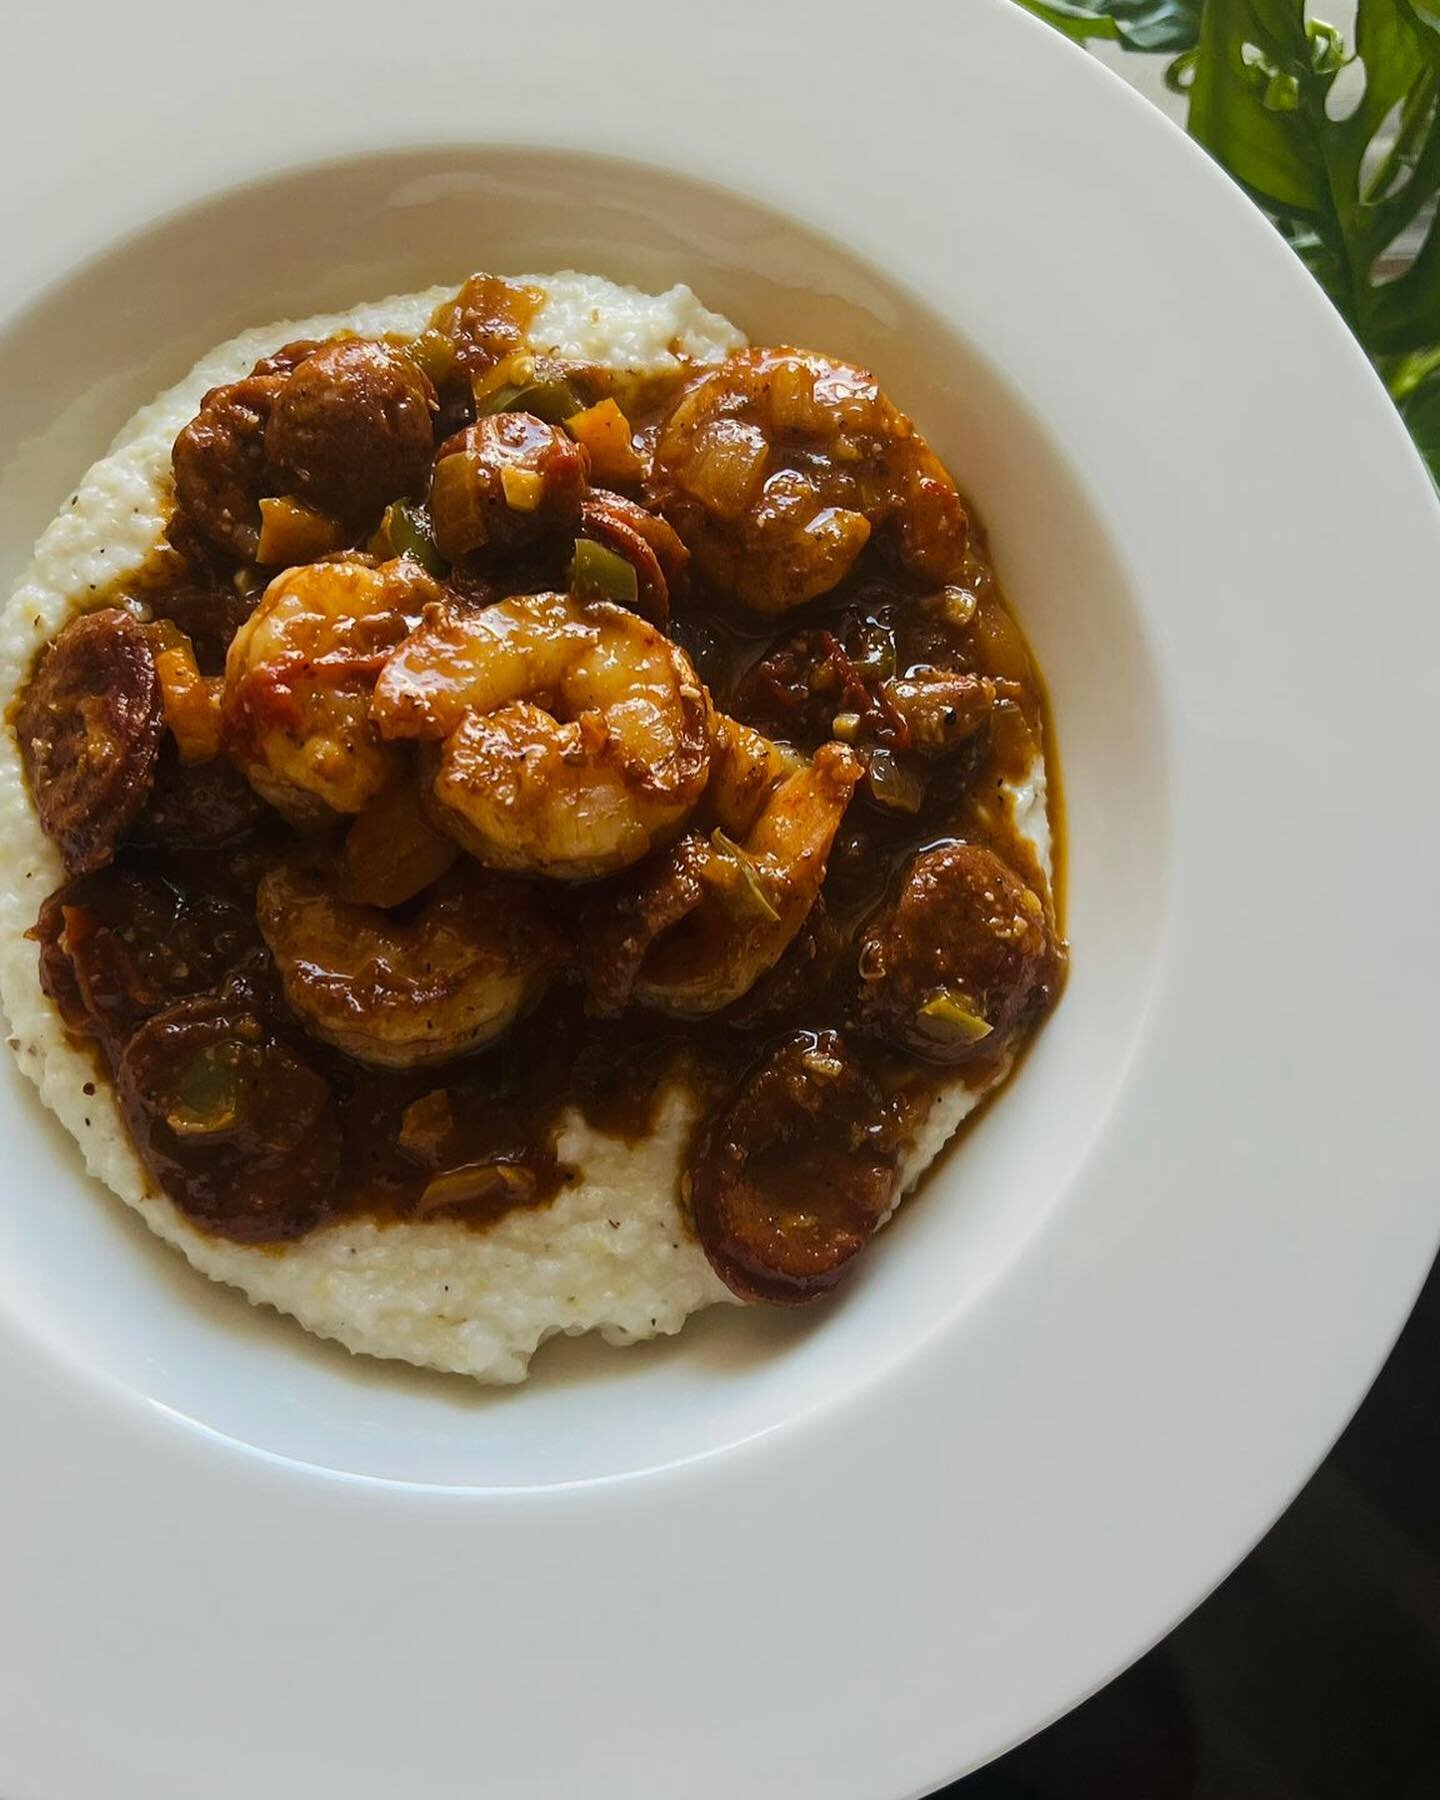 shrimp.
heirloom grits.
andouille gravy.
love.
#thafoodist 🤌🏽